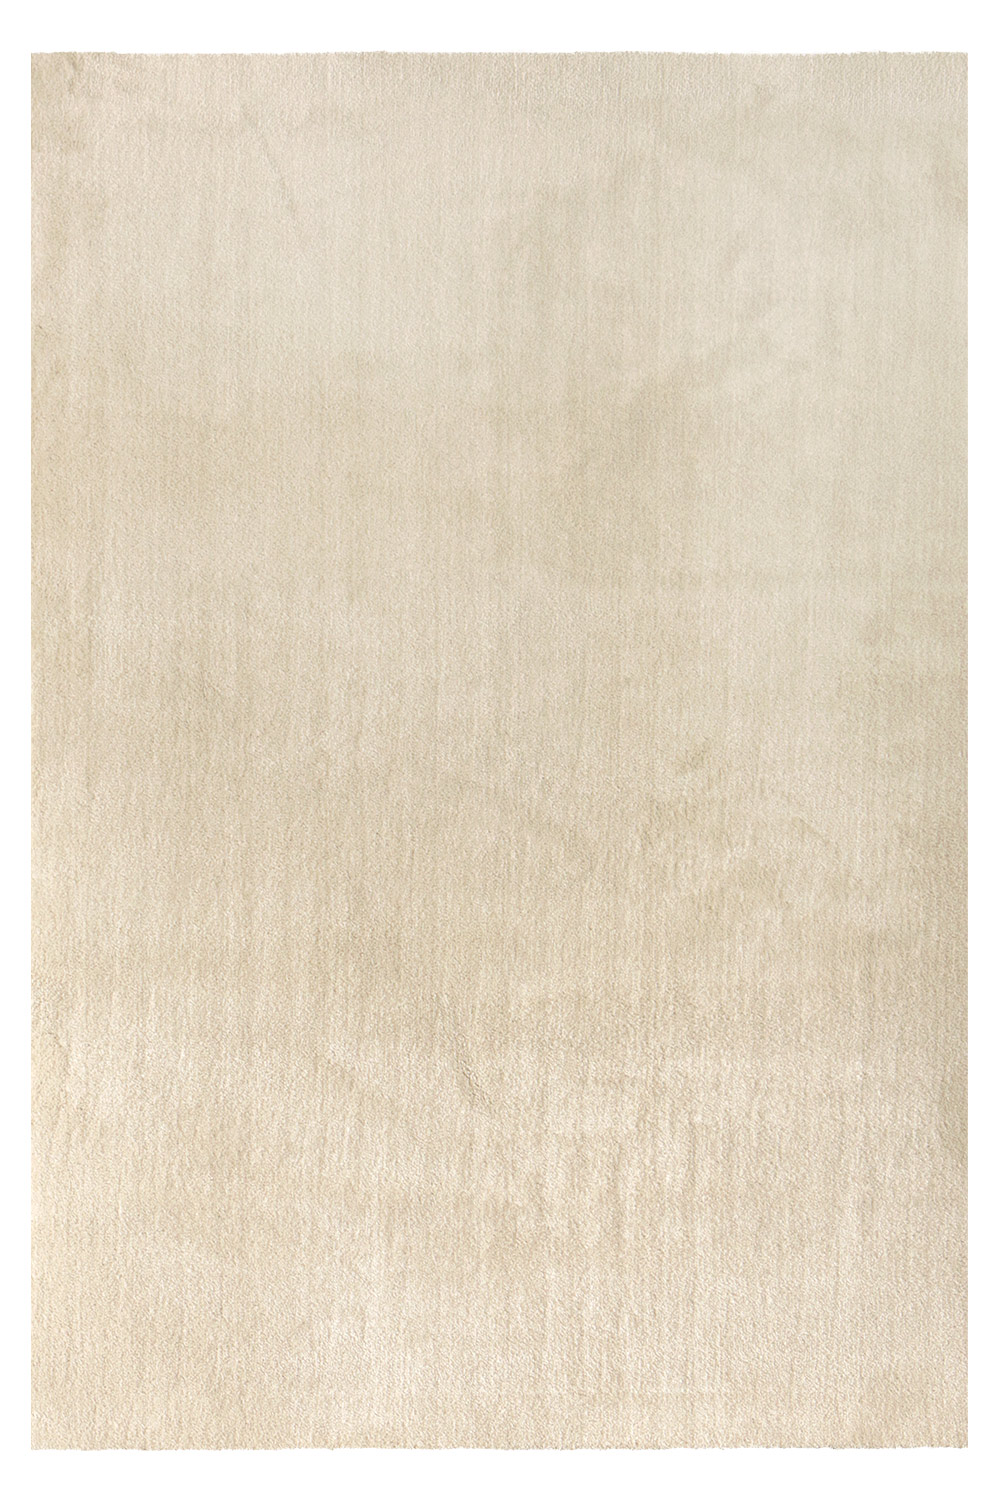 Kusový koberec Labrador 71351 050 Beige